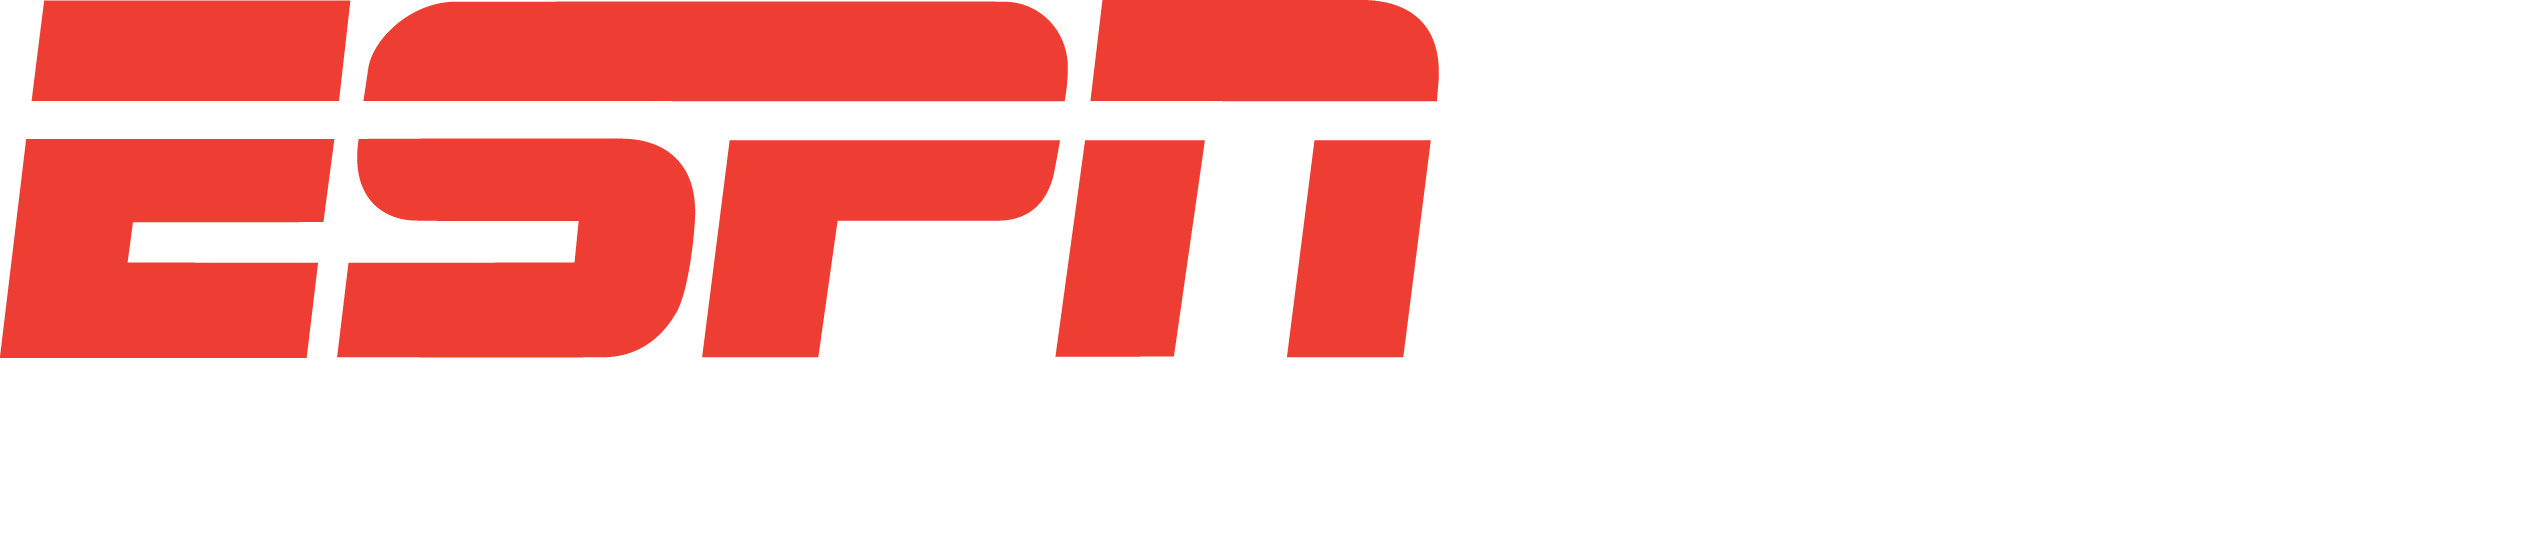 espn media png logo #4154